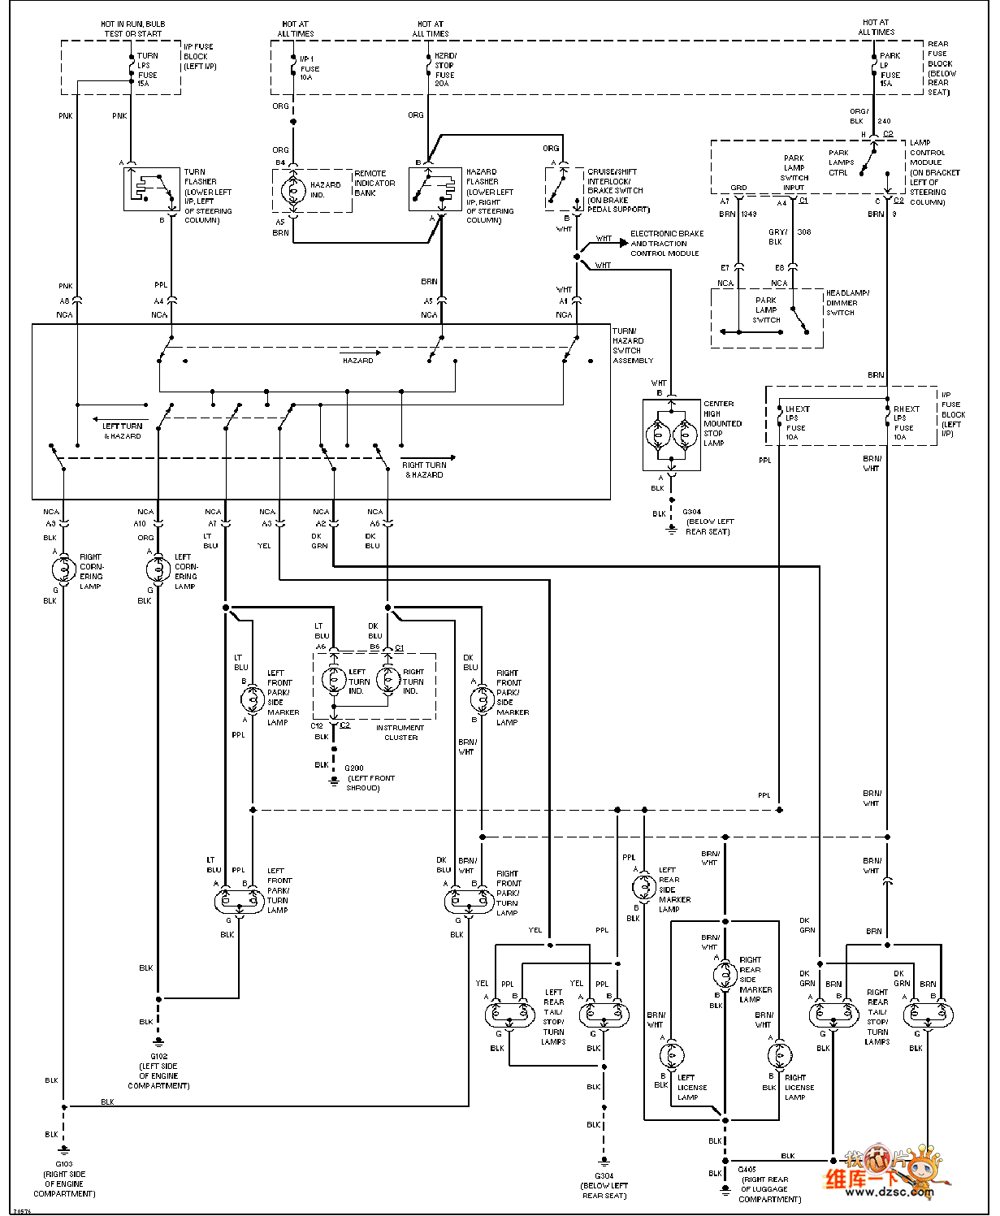 Oldsmobile external light circuit diagram